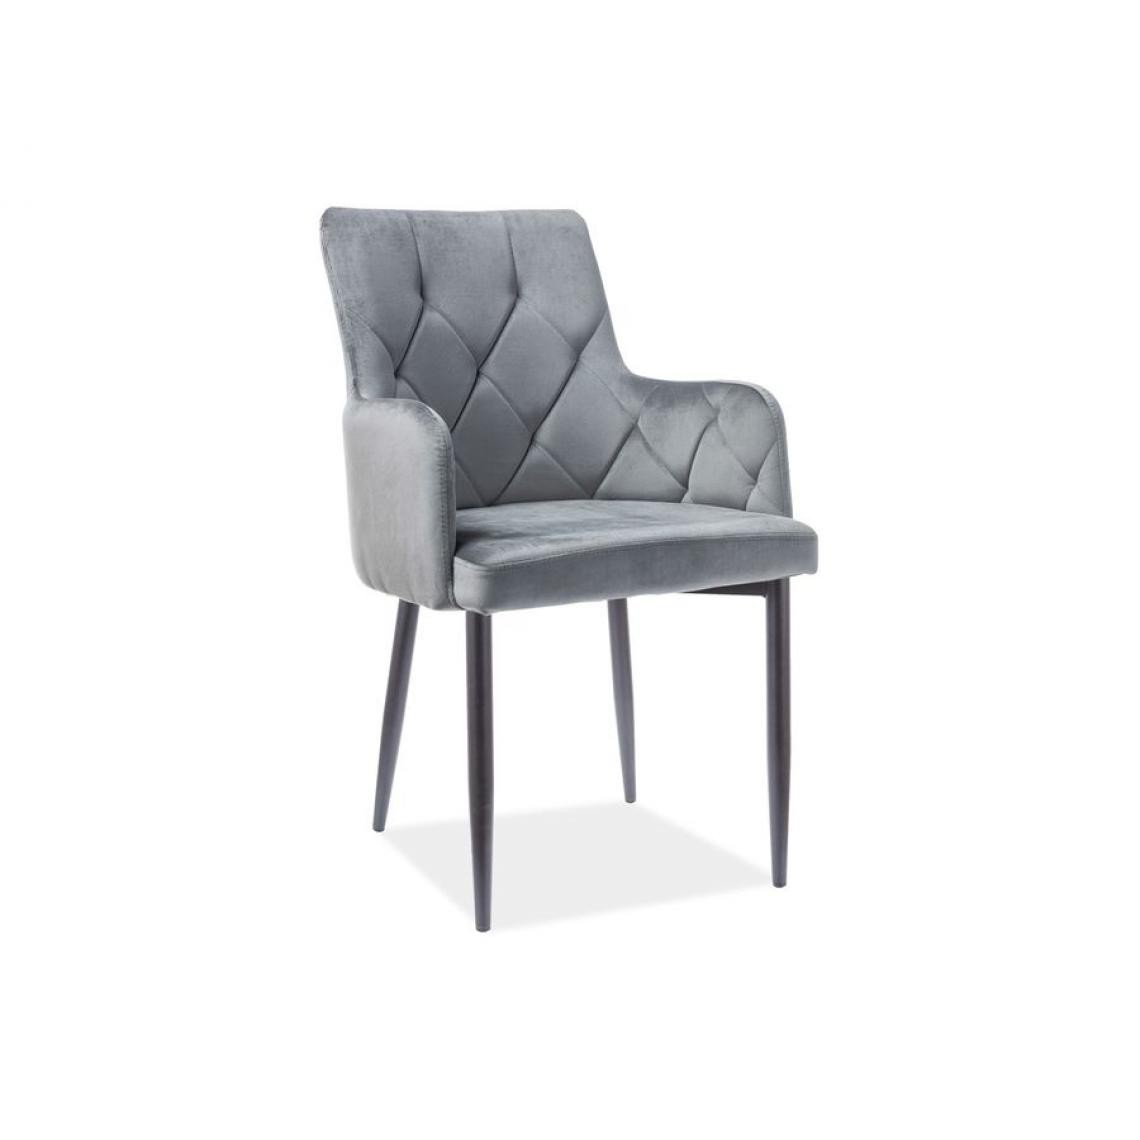 Hucoco - RICAROF - Chaise style glamour salon/salle à manger - 88x57x45 cm - Gris - Chaises